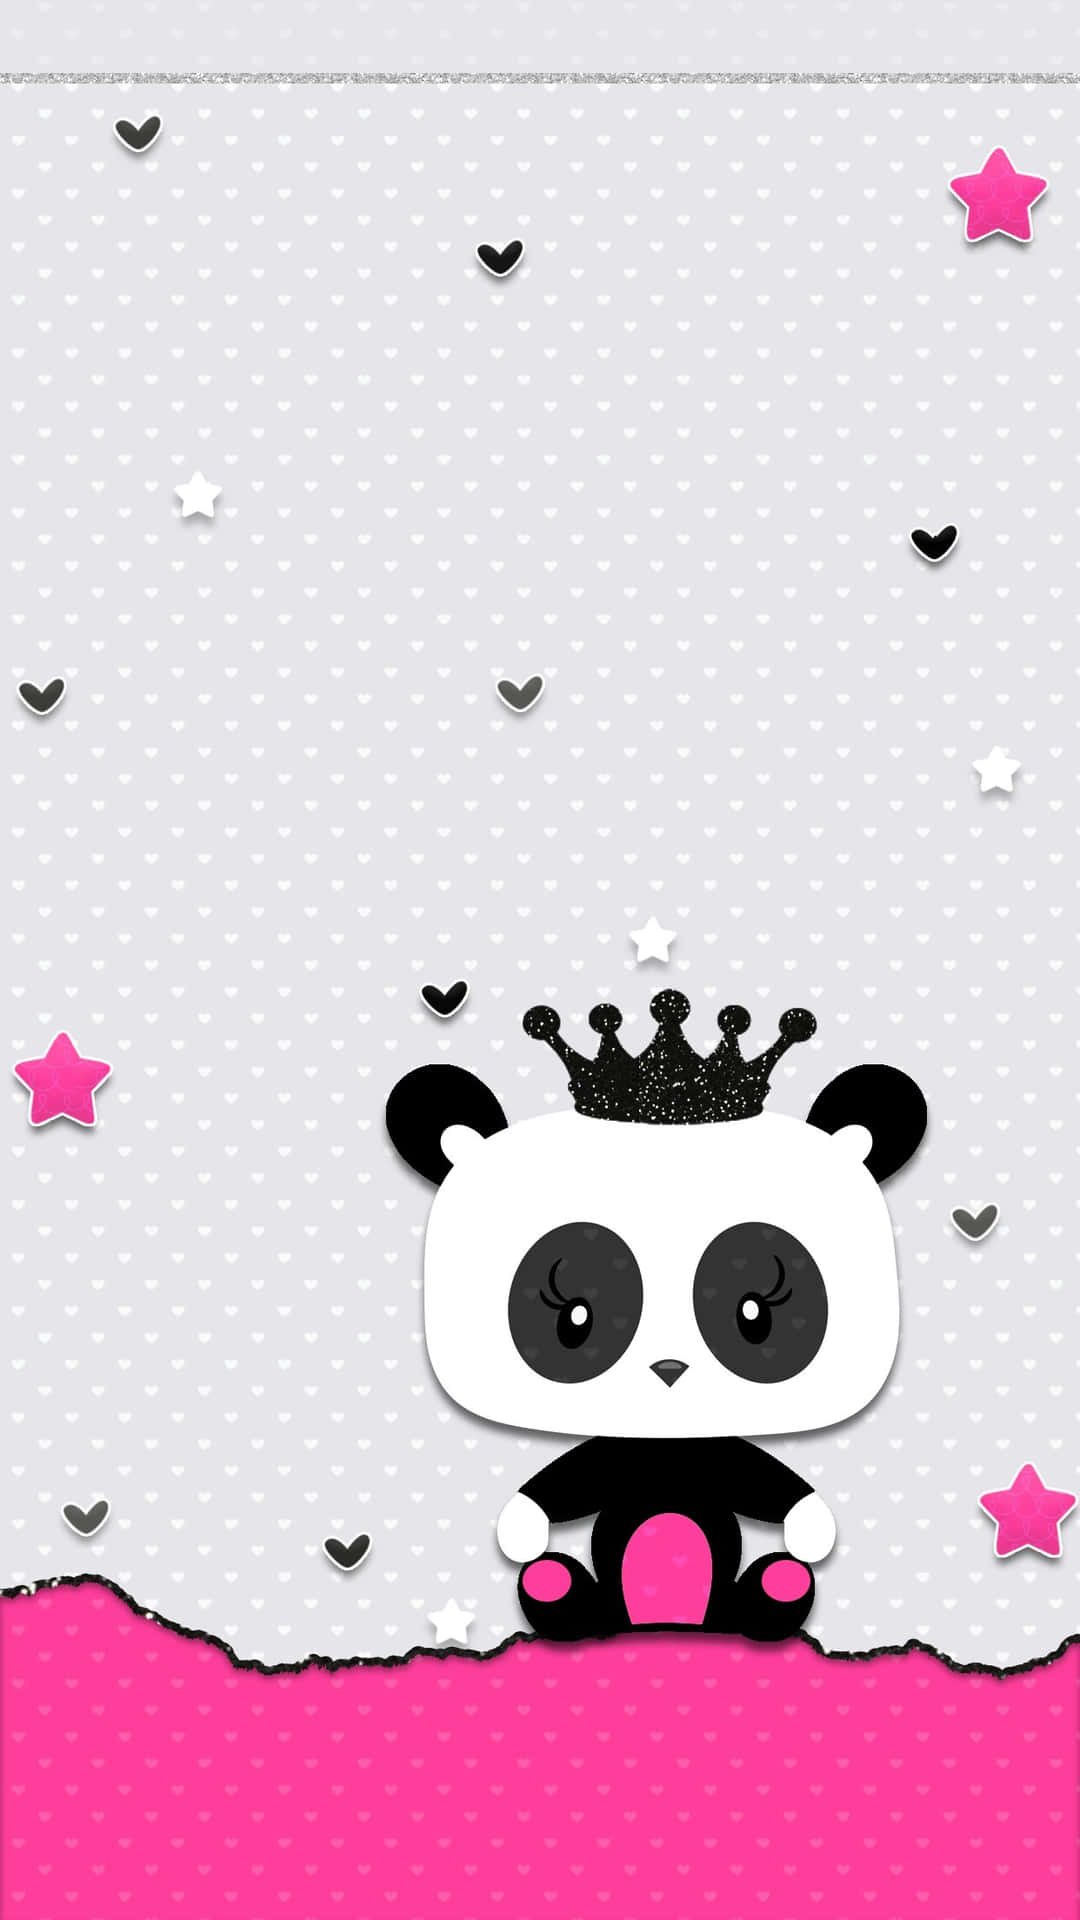 Cute Cartoon Panda With Crown Wallpaper